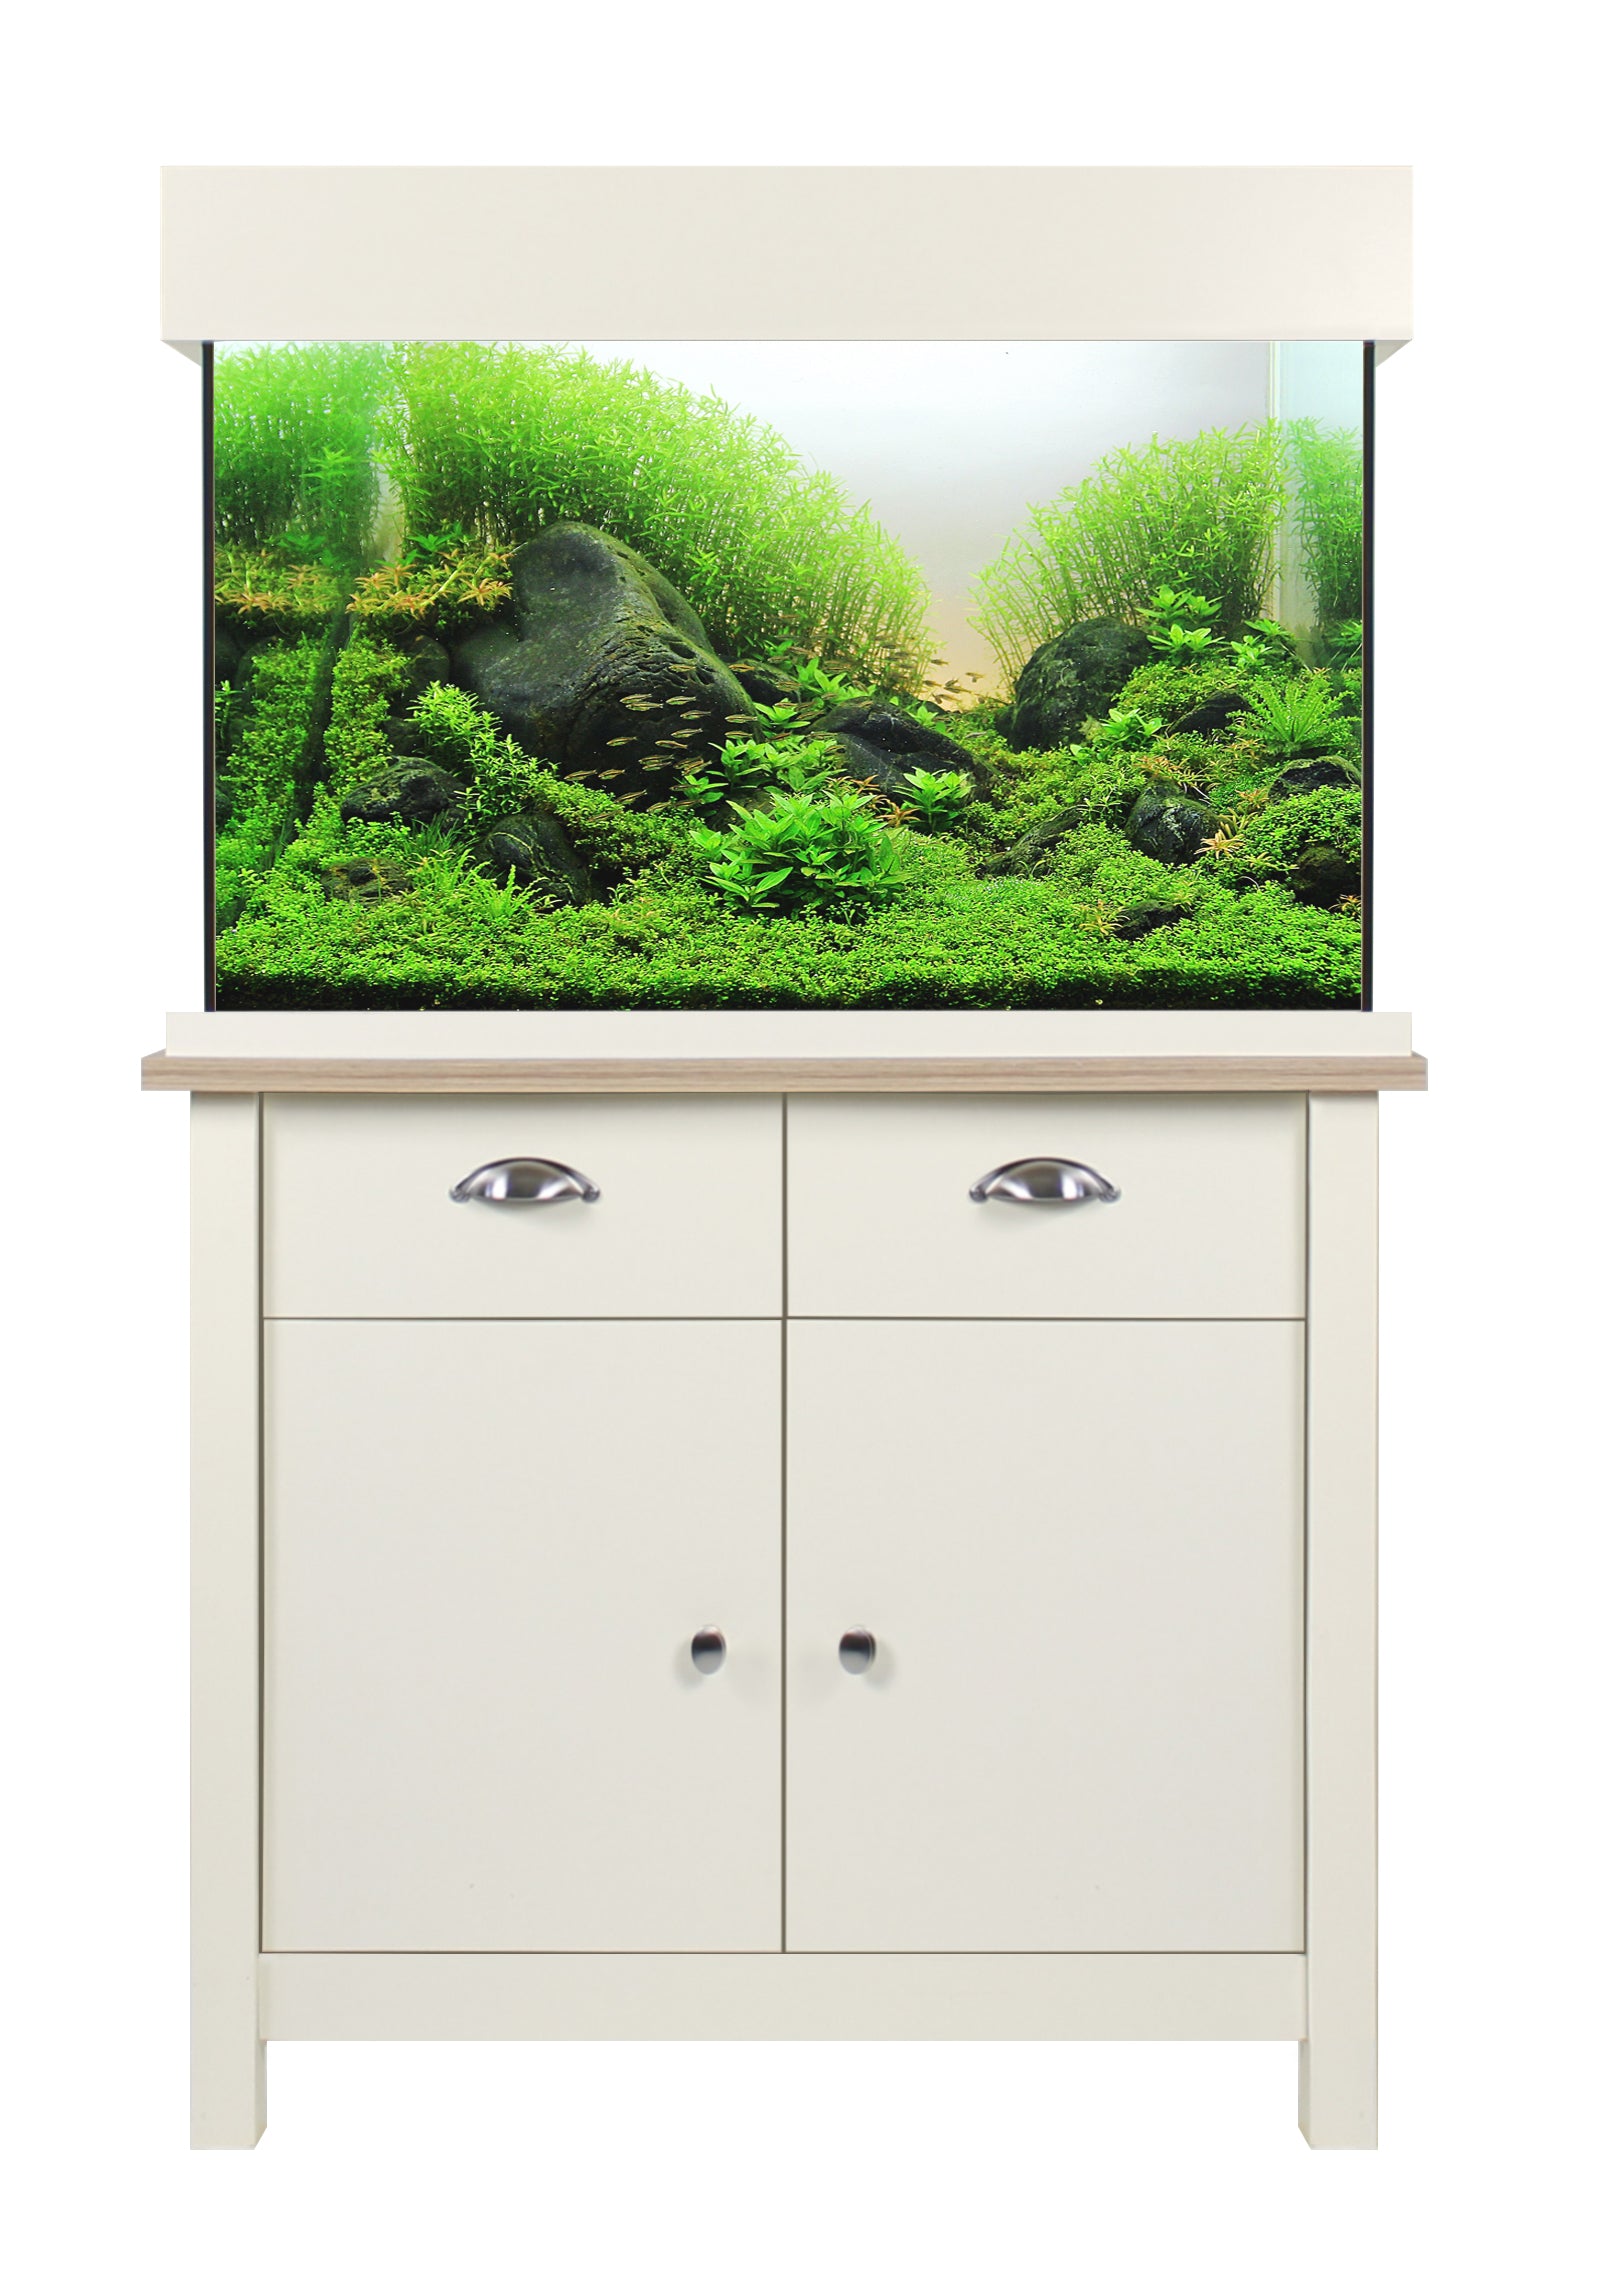 Aqua One OakStyle 145 Aquarium and Cabinet (Soft White)